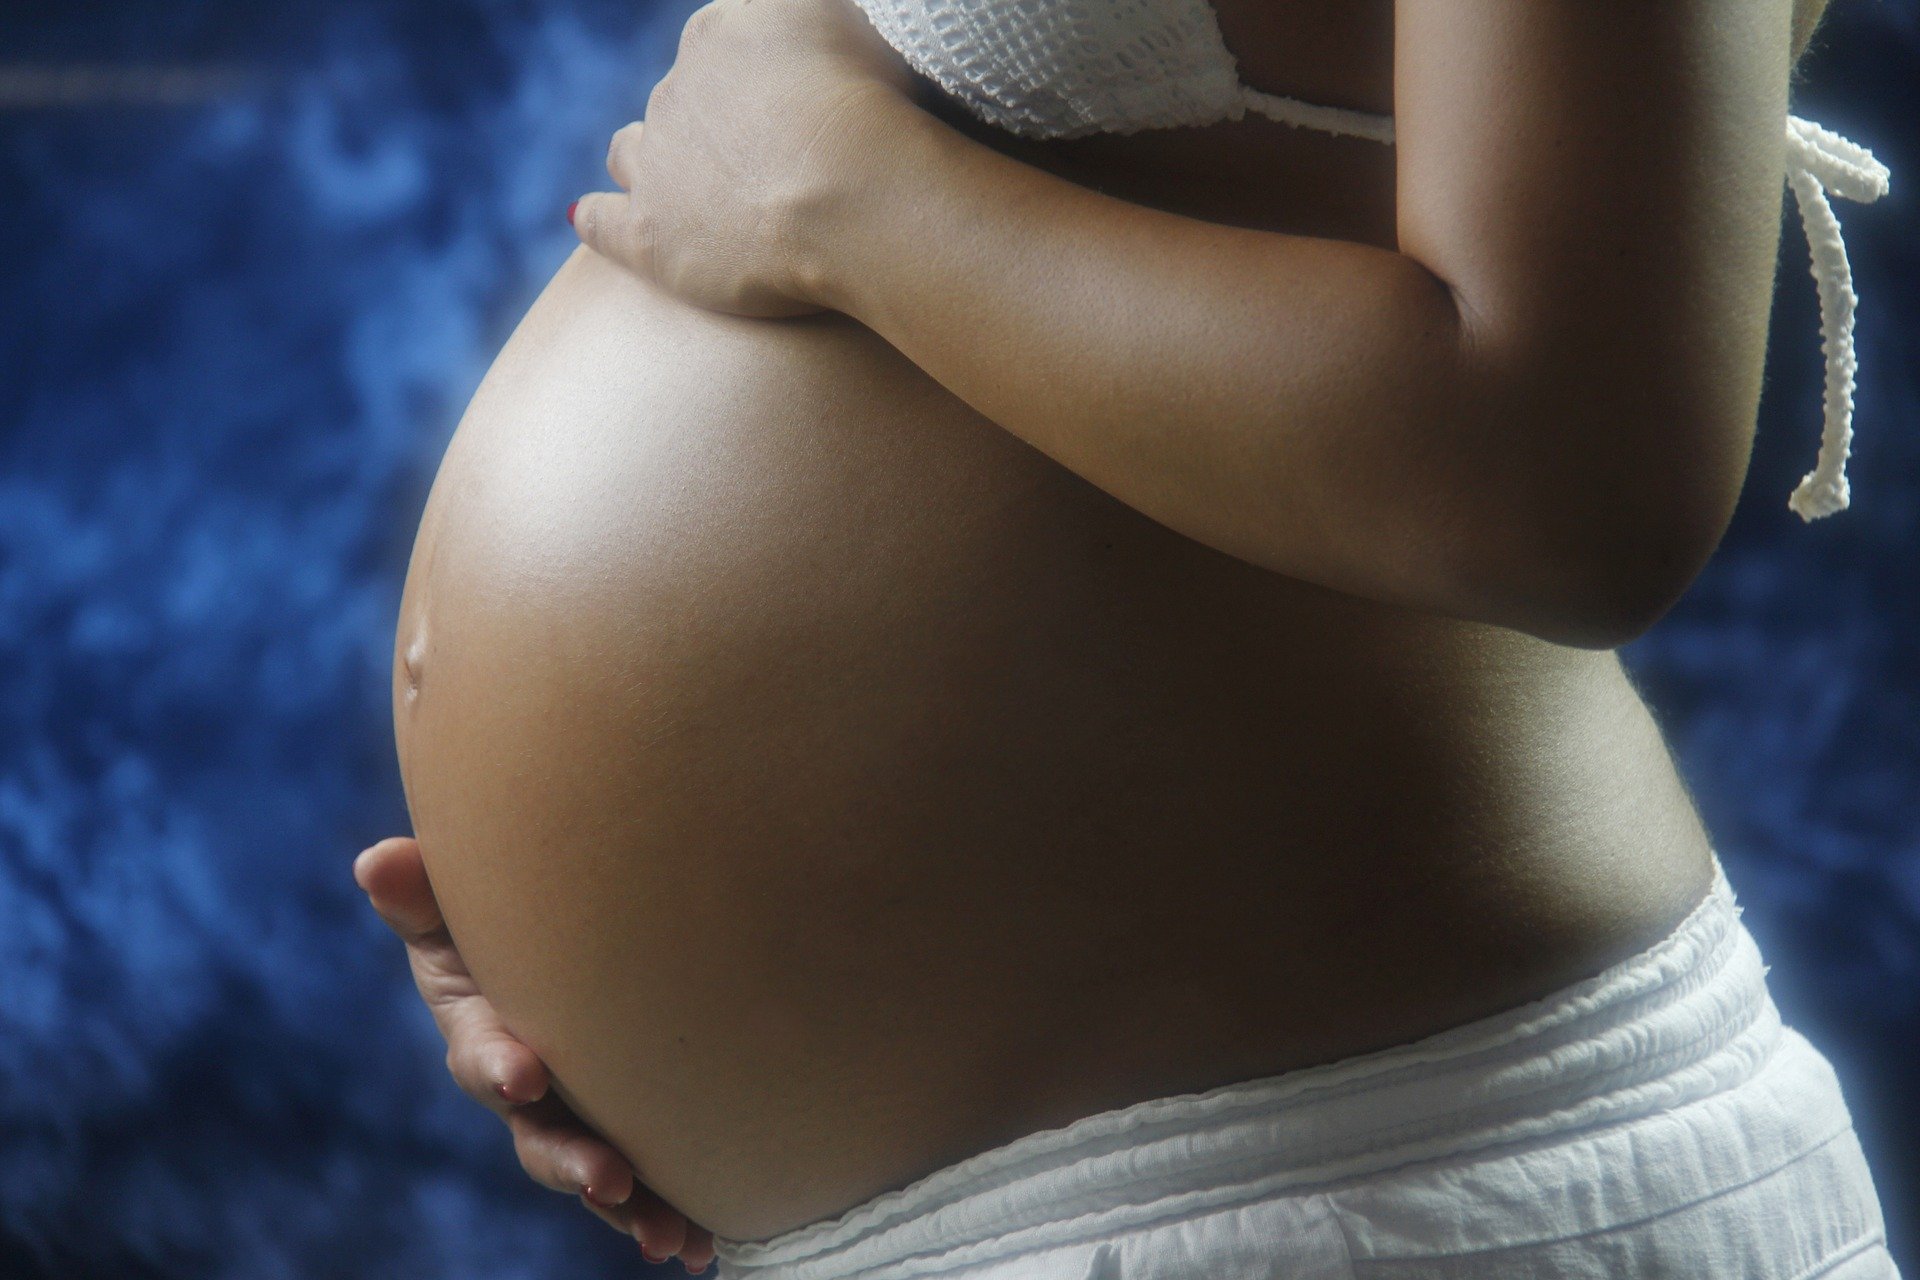 signs of pregnancy women's center ohio